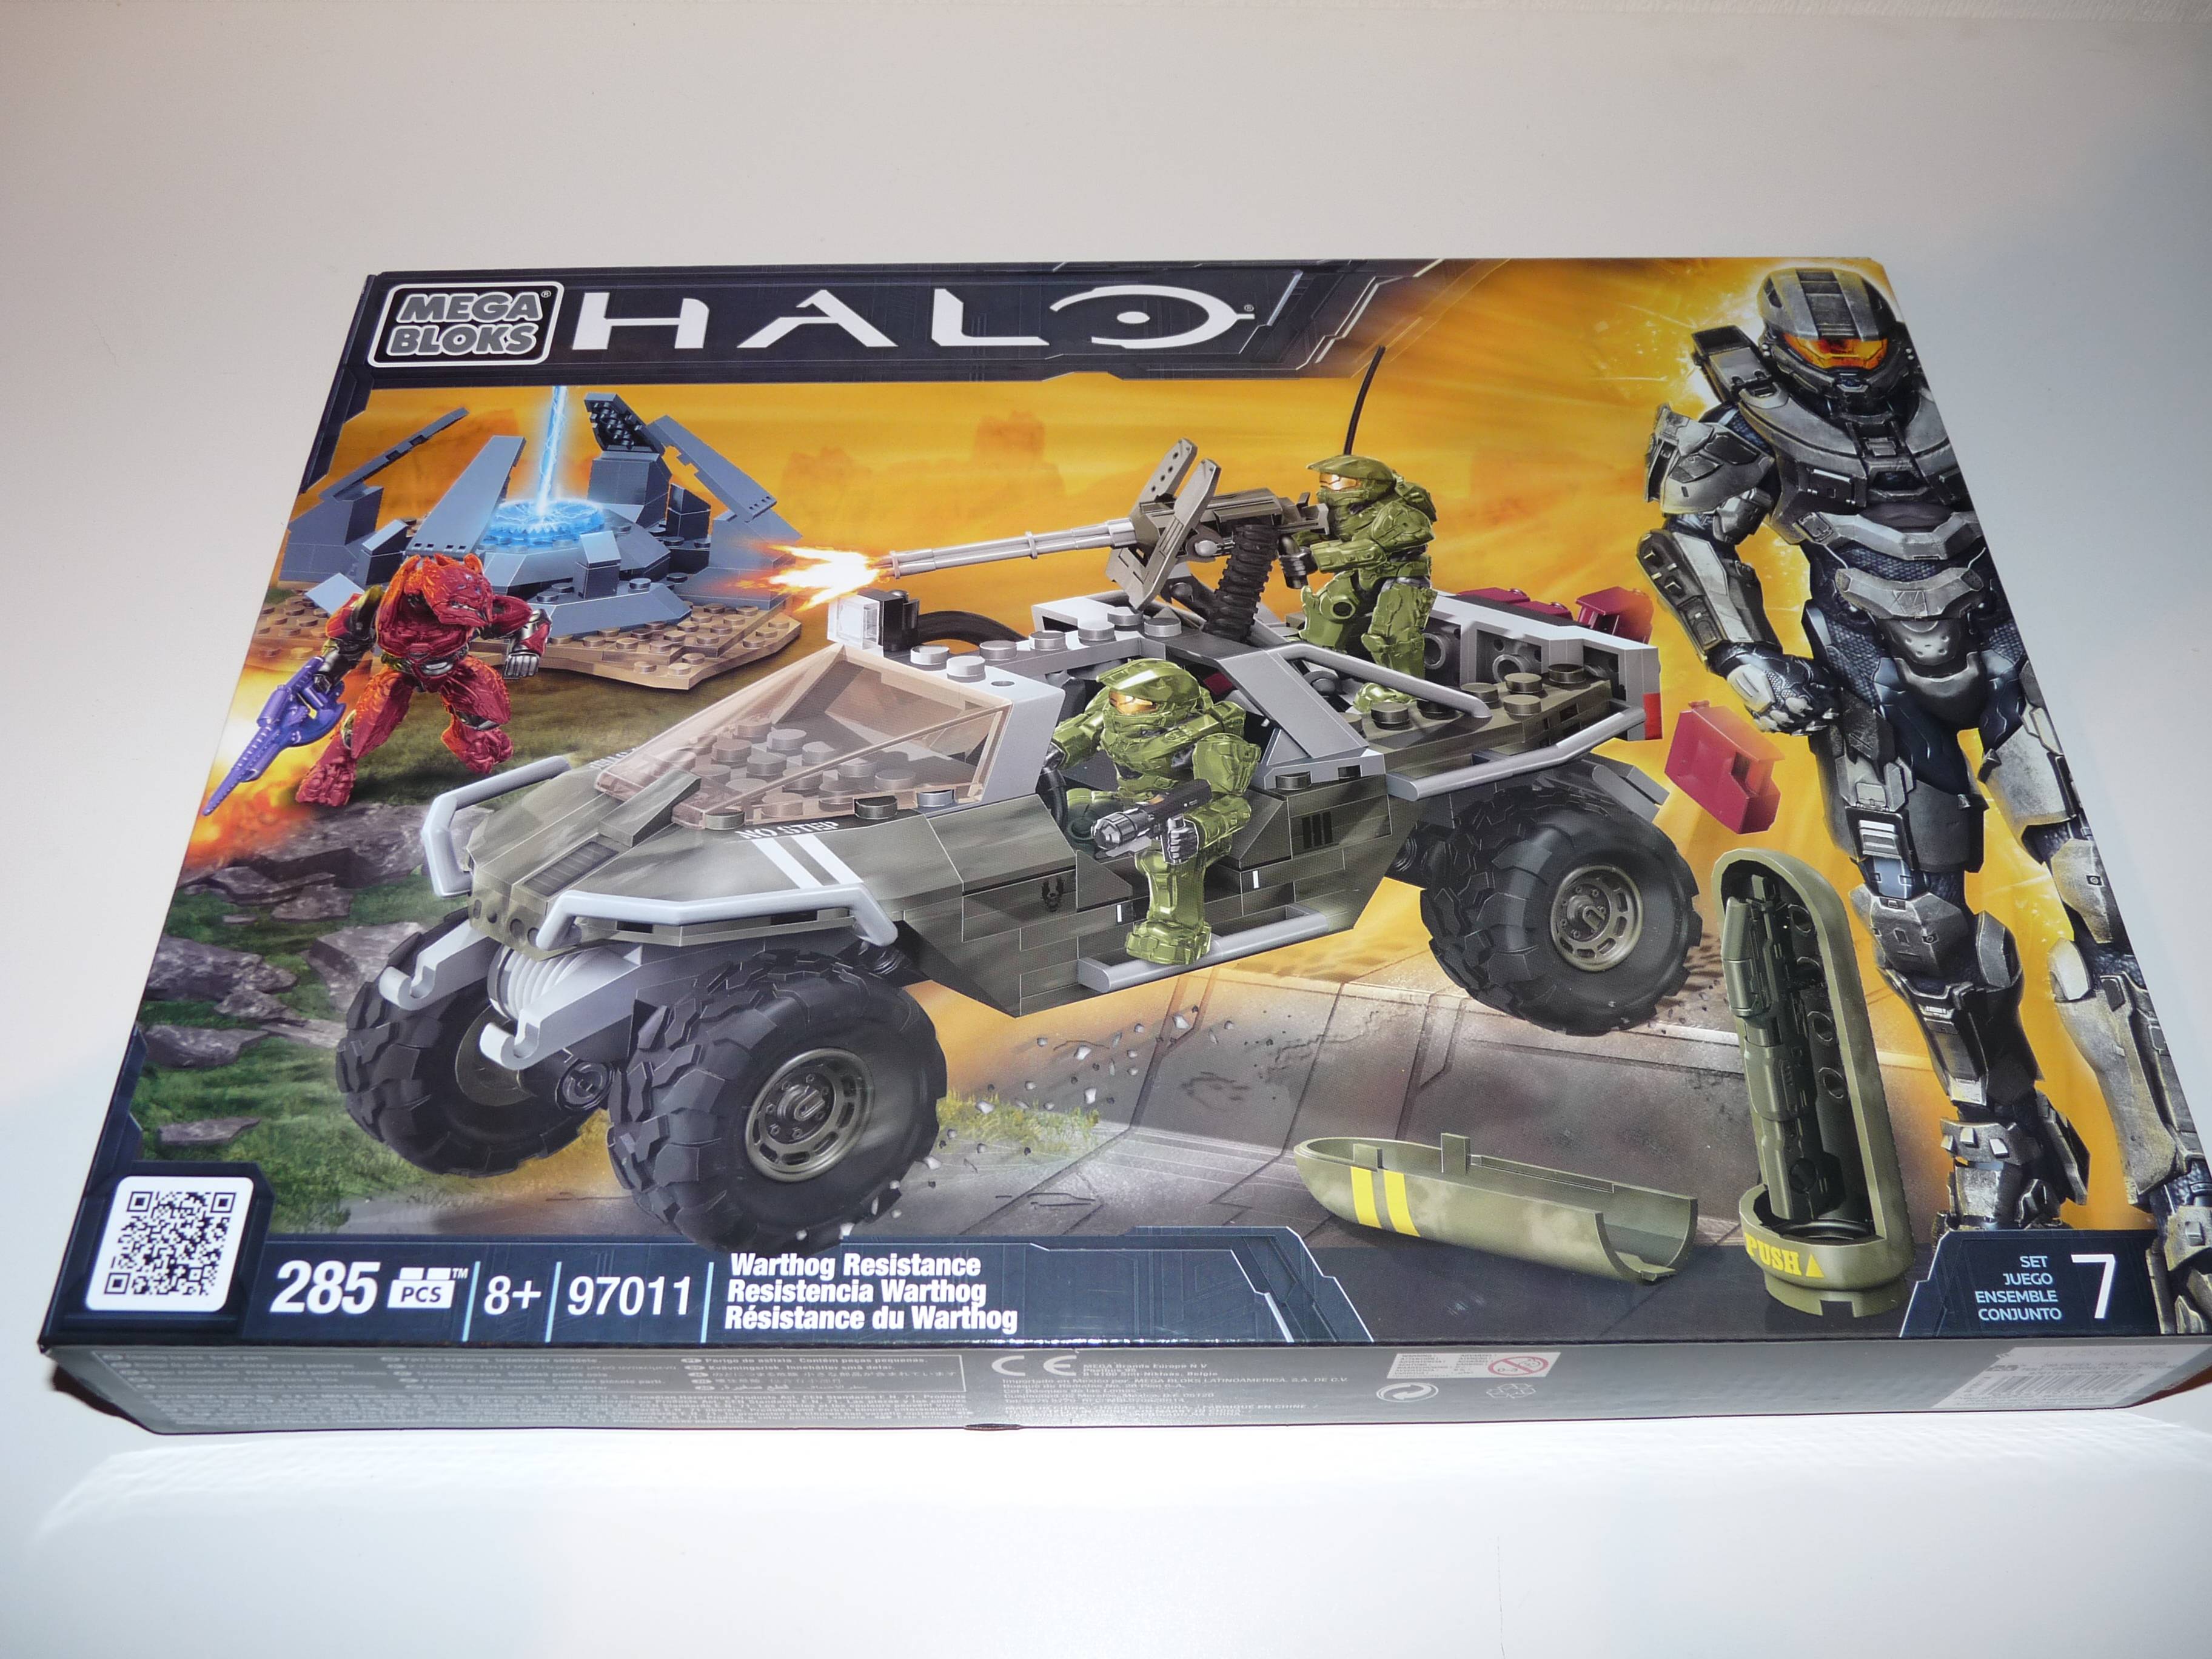 Halo-Diorama Teil 12 – Warthog Resistance